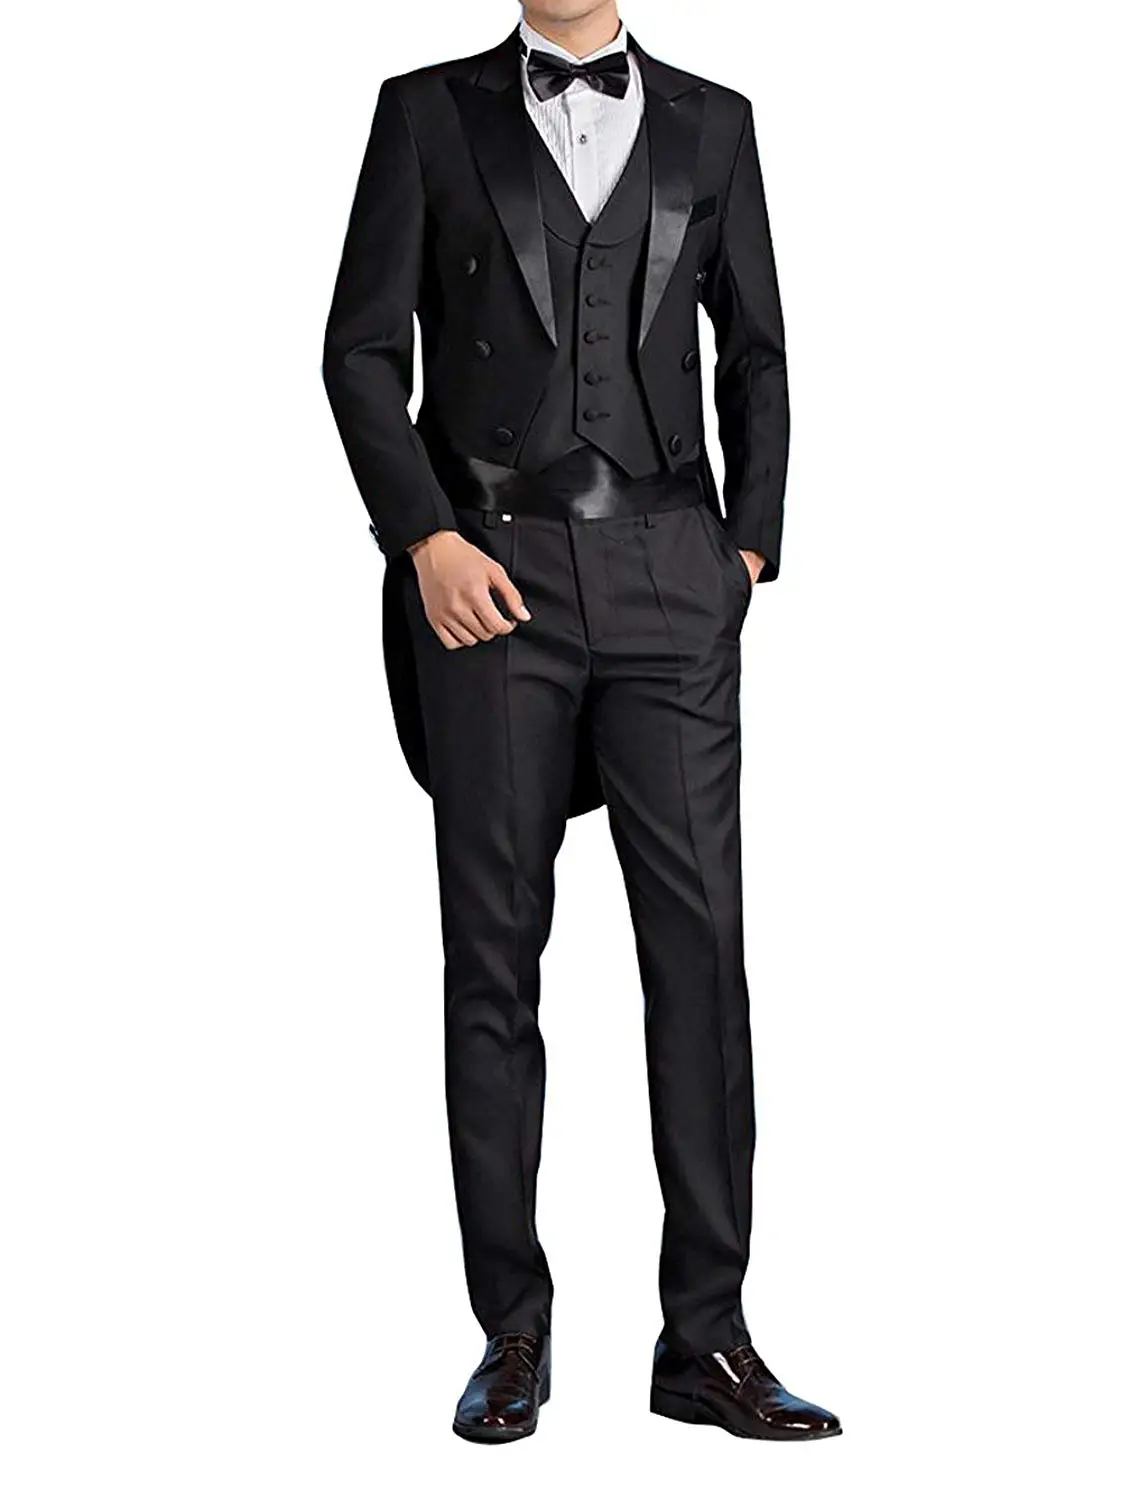 Buy JYDress Mens Suit Premium Tail Tuxedo 3pc Tailcoat Suit in Gray ...